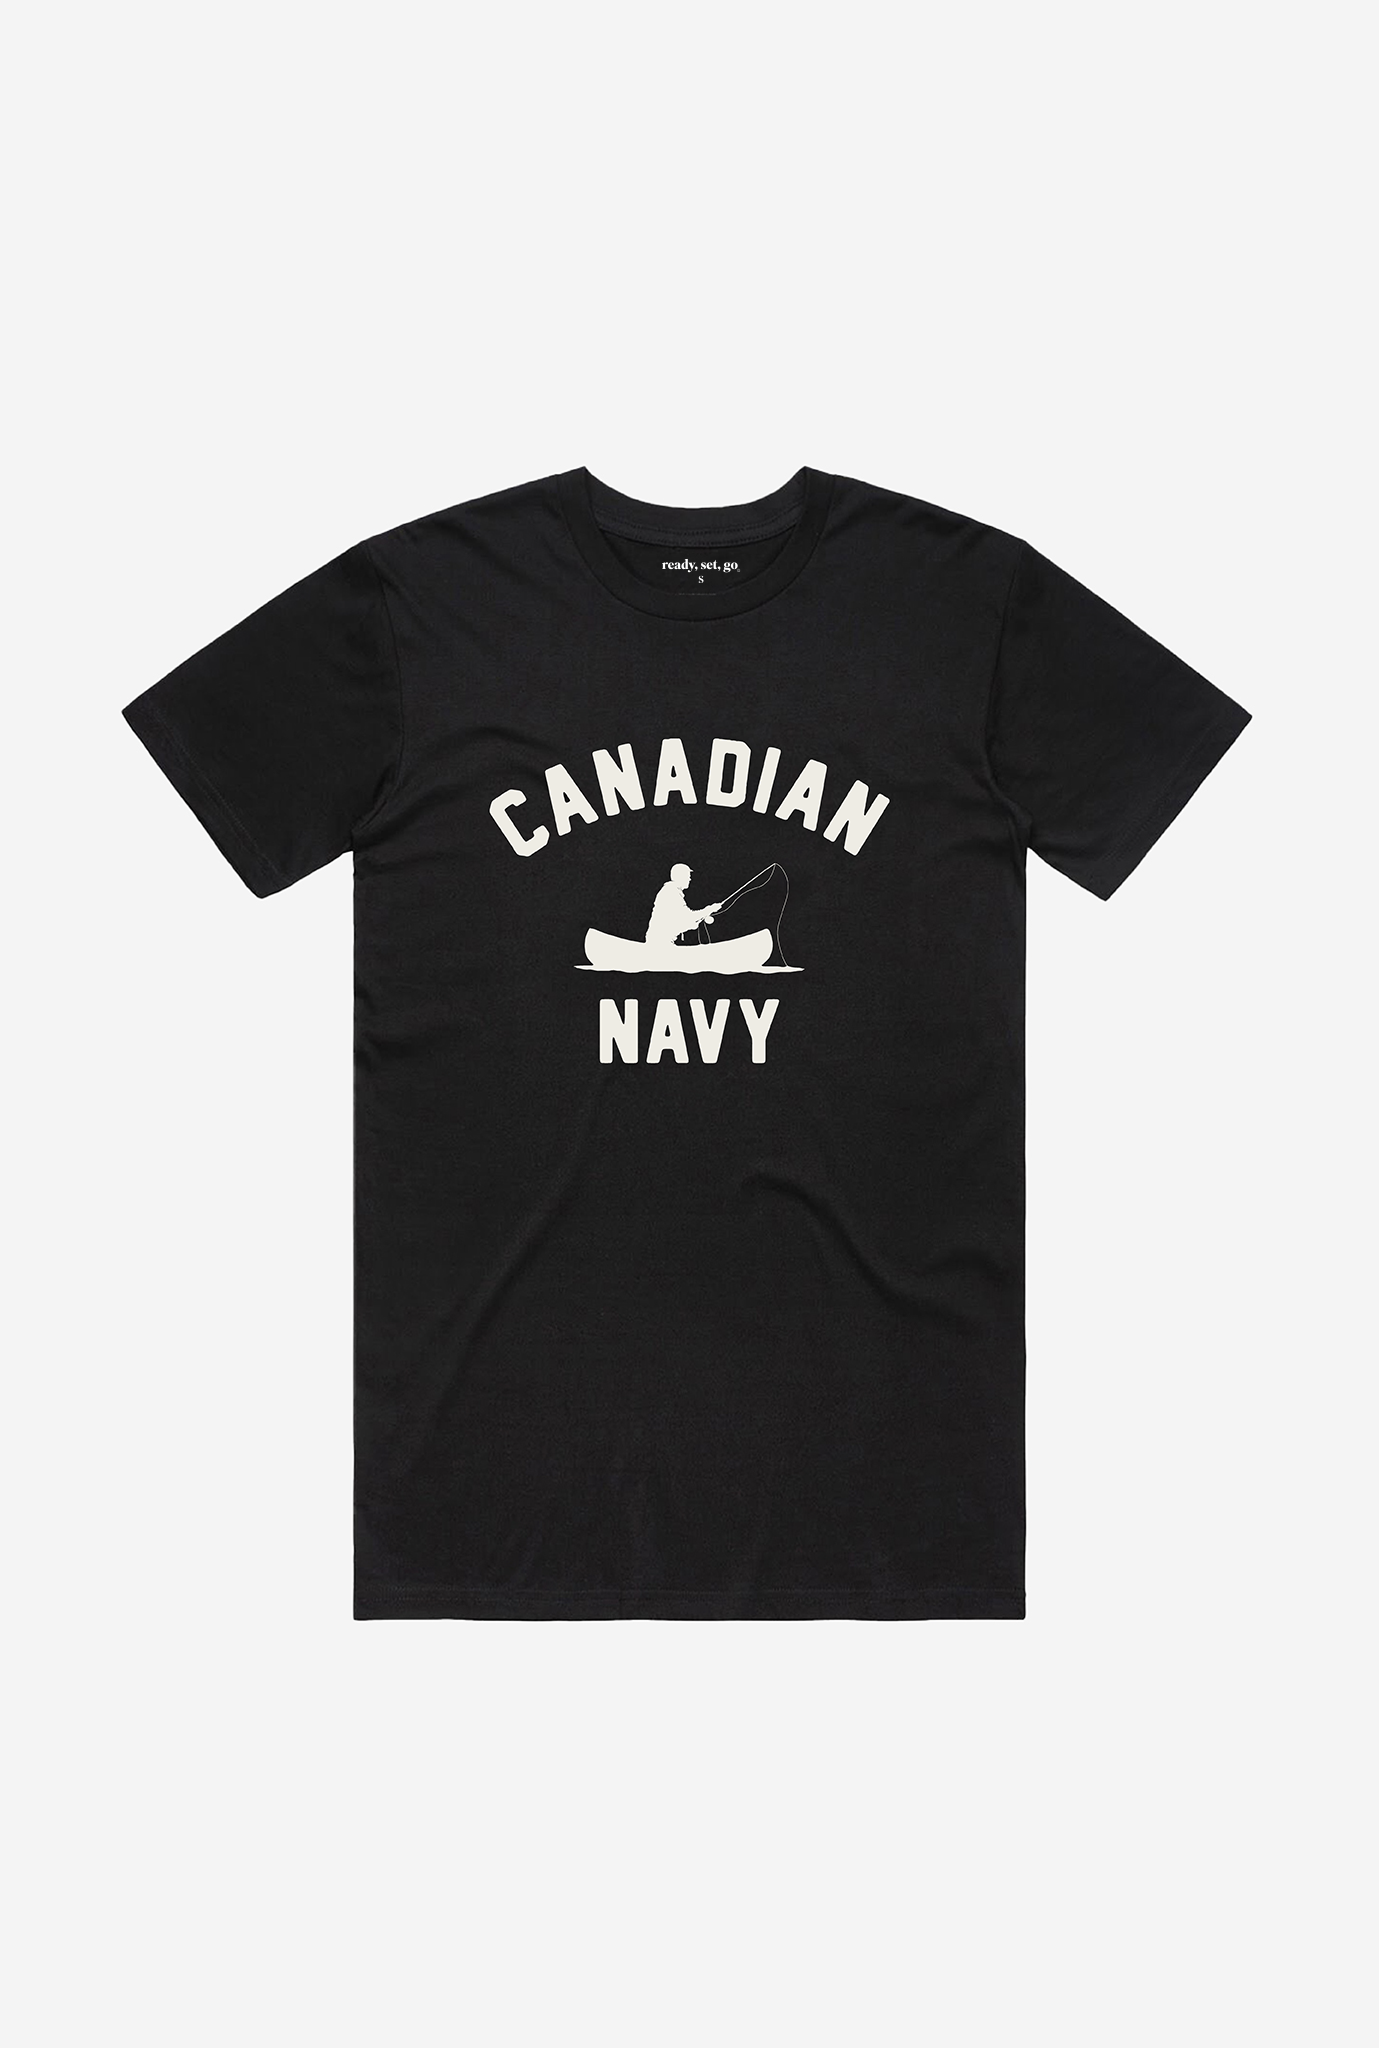 Canadian Navy T-Shirt - Black